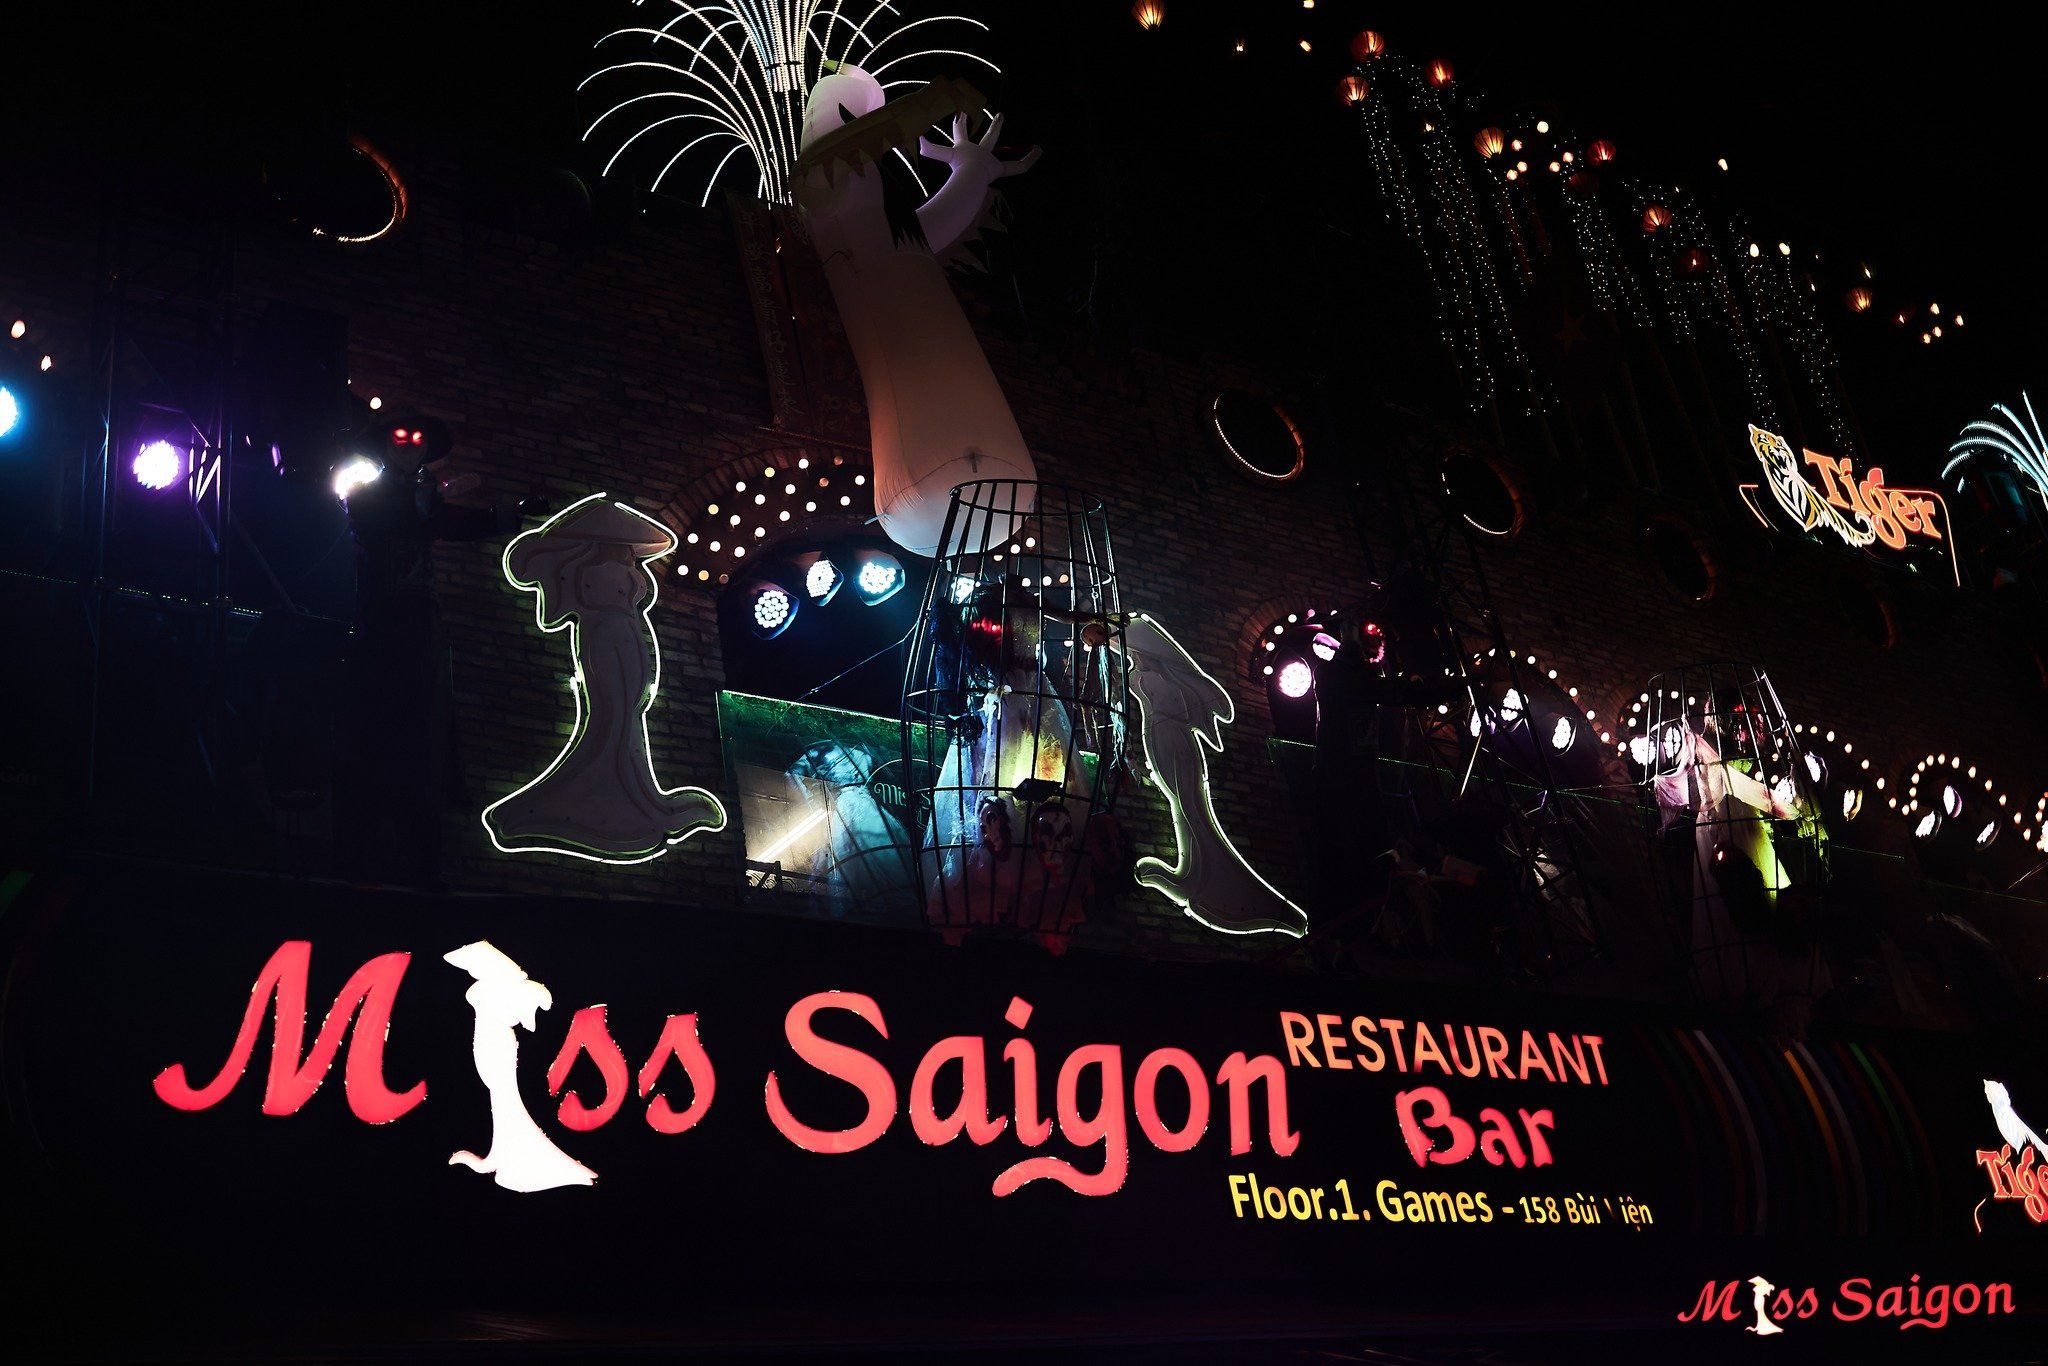 Miss Saigon Restaurant & Bar - 158 Bùi Viện